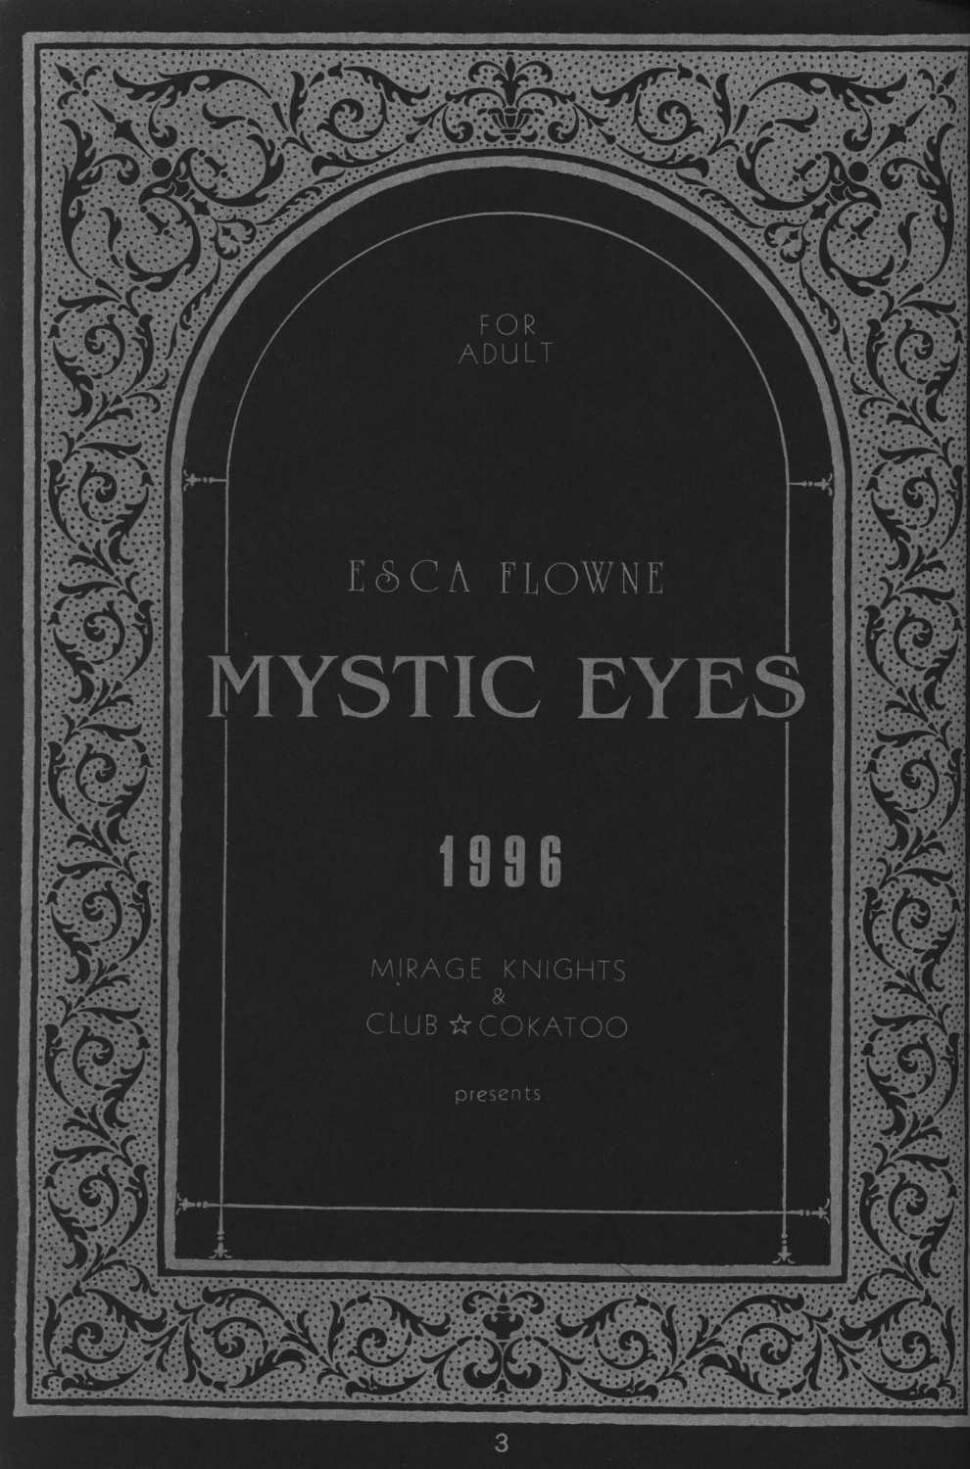 Concha MYSTIC EYES - The vision of escaflowne Cachonda - Page 2